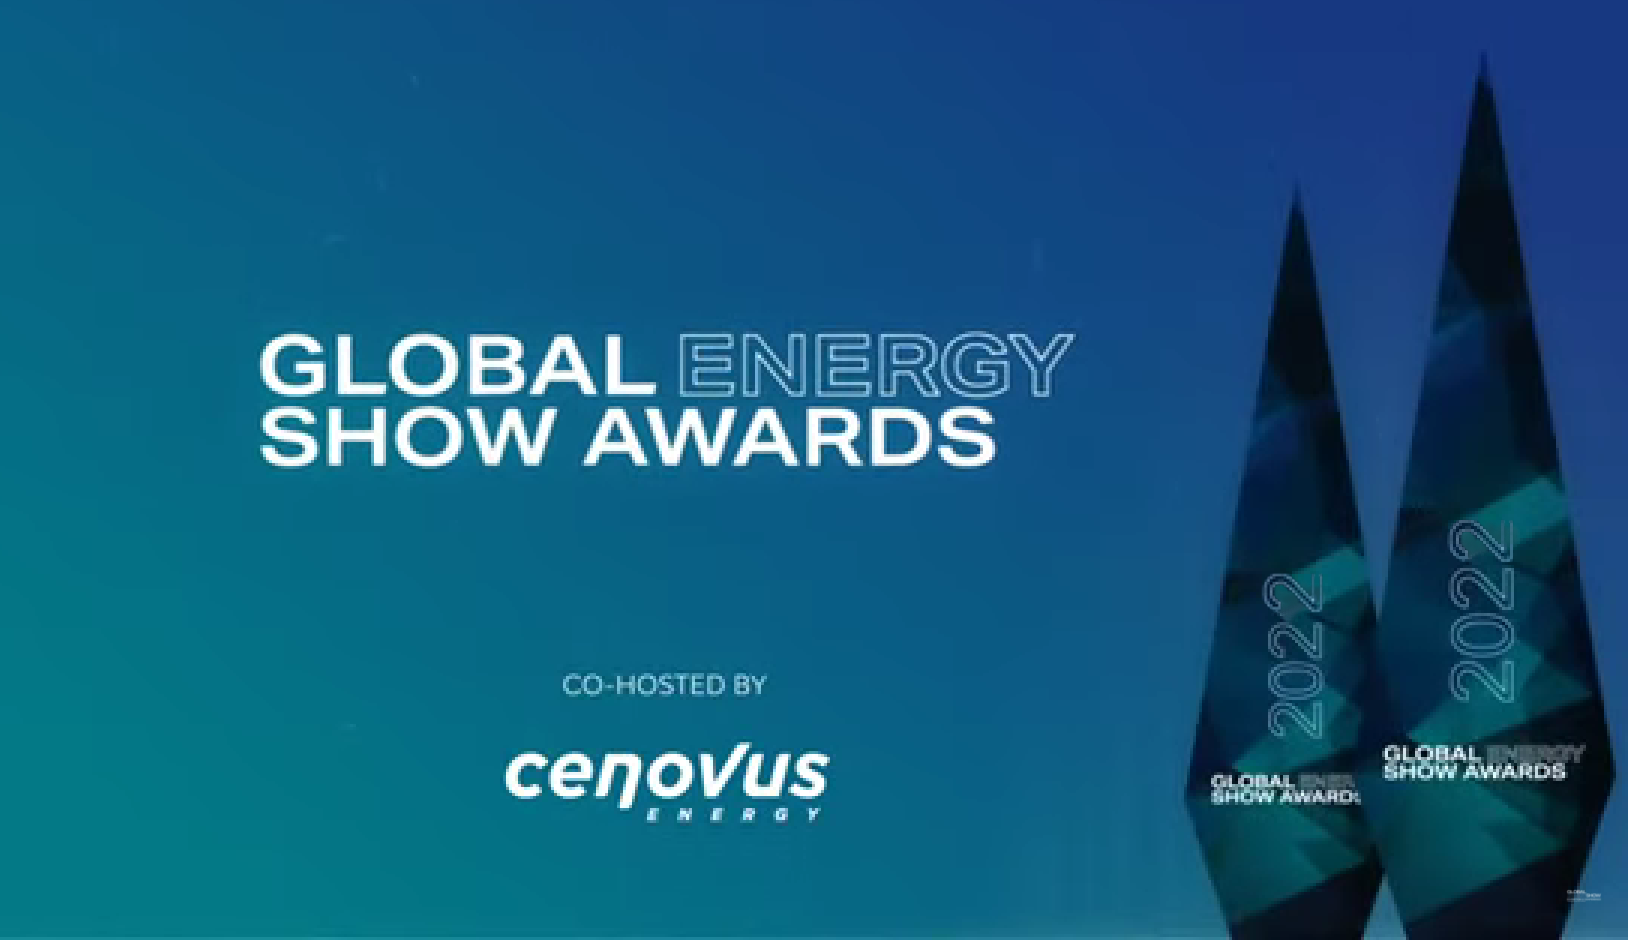 Global Energy Show Awards - June 8, 2022